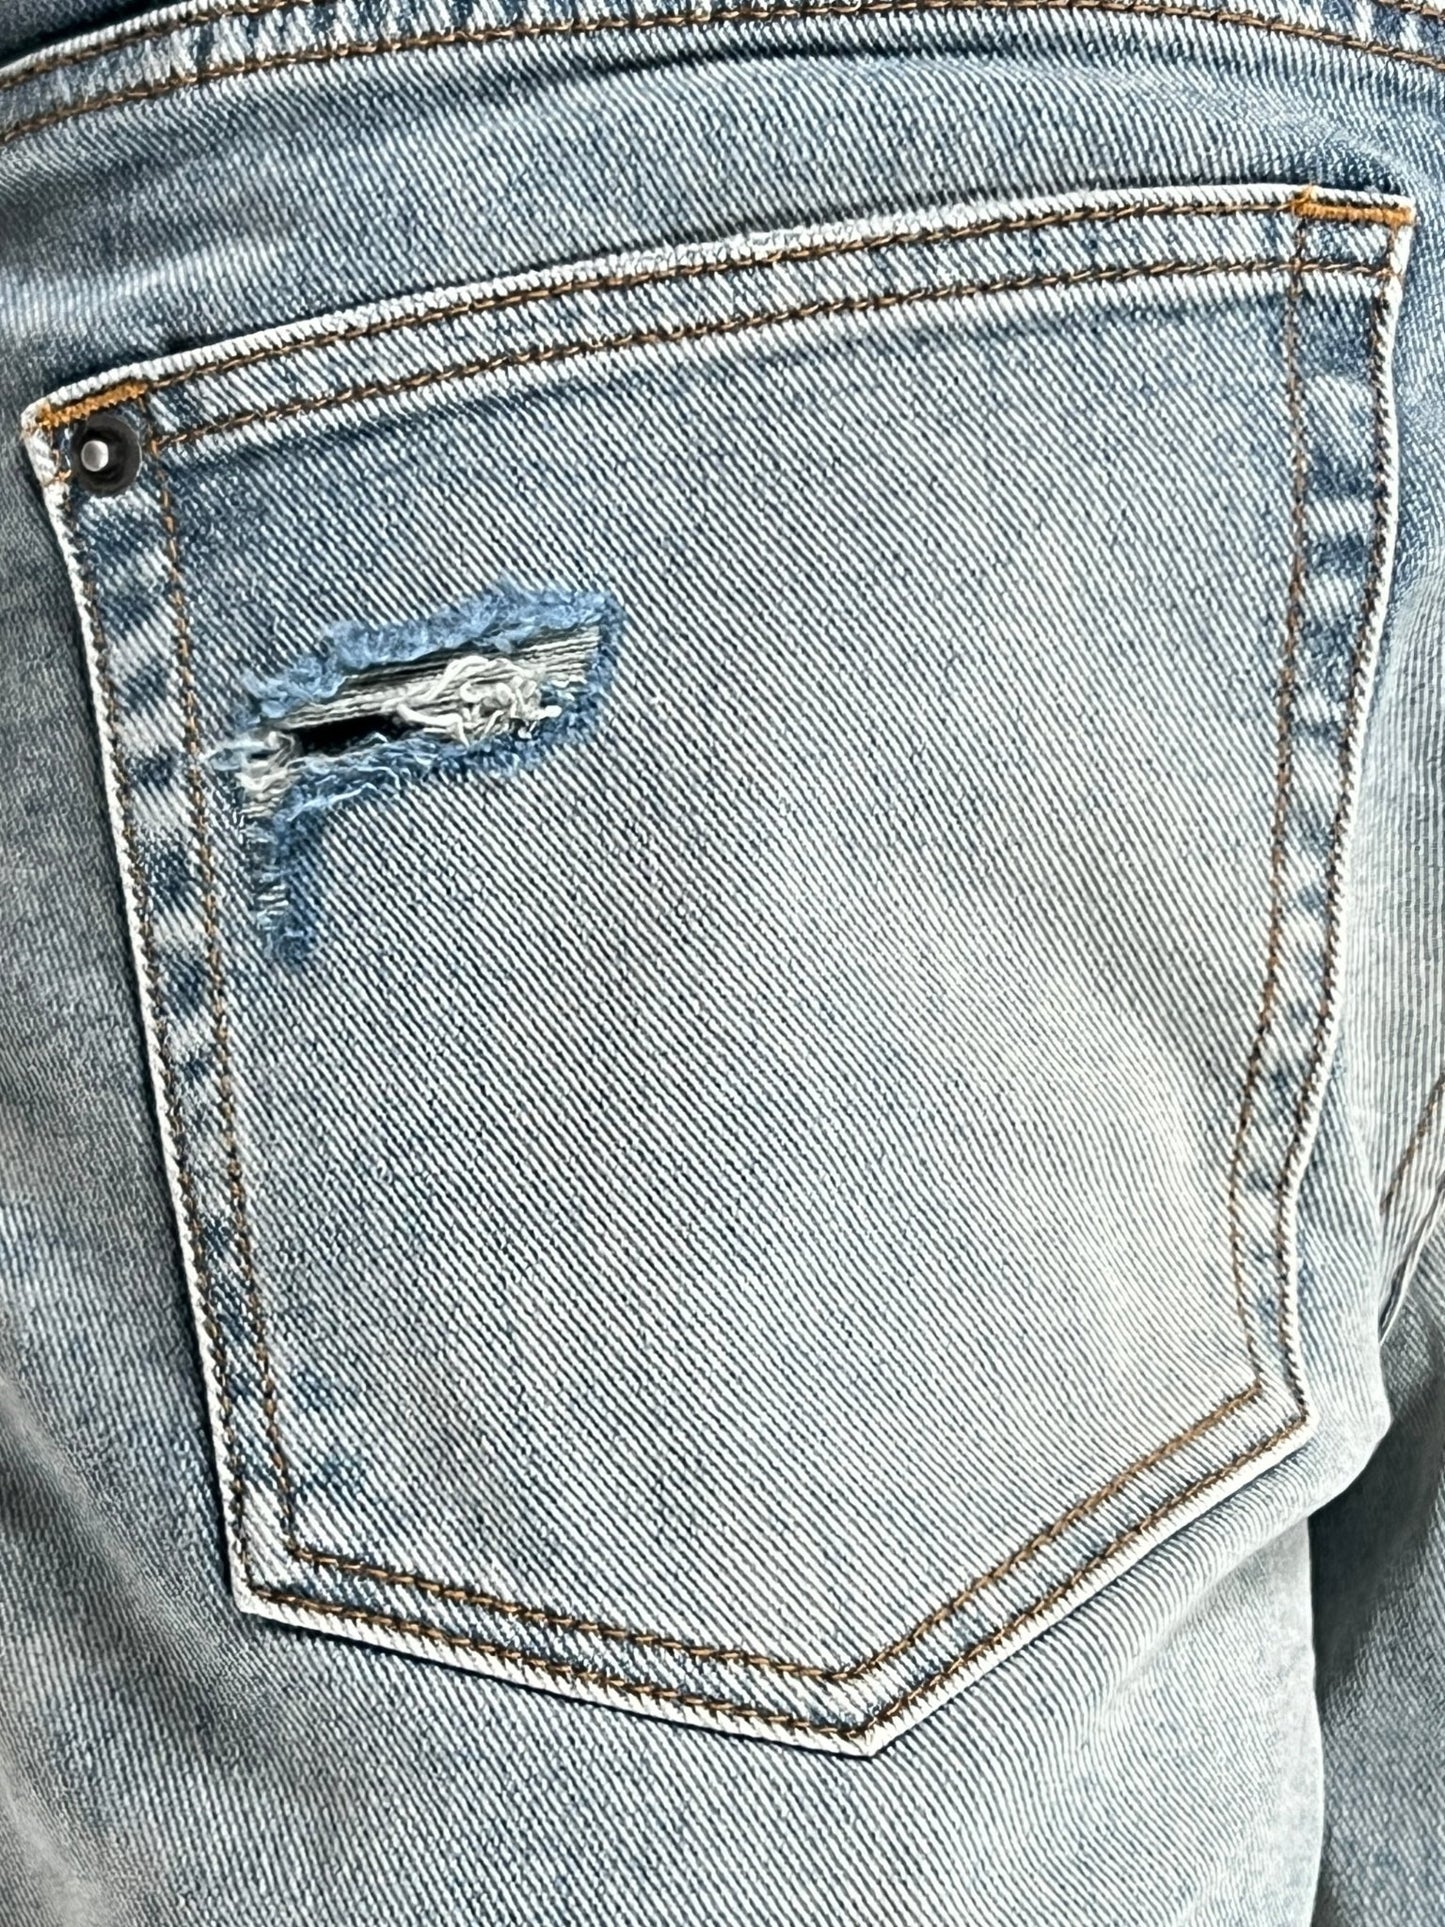 Close-up of a worn KSUBI BRONKO DYANAMITE METAL DENIM pocket with fraying edges.